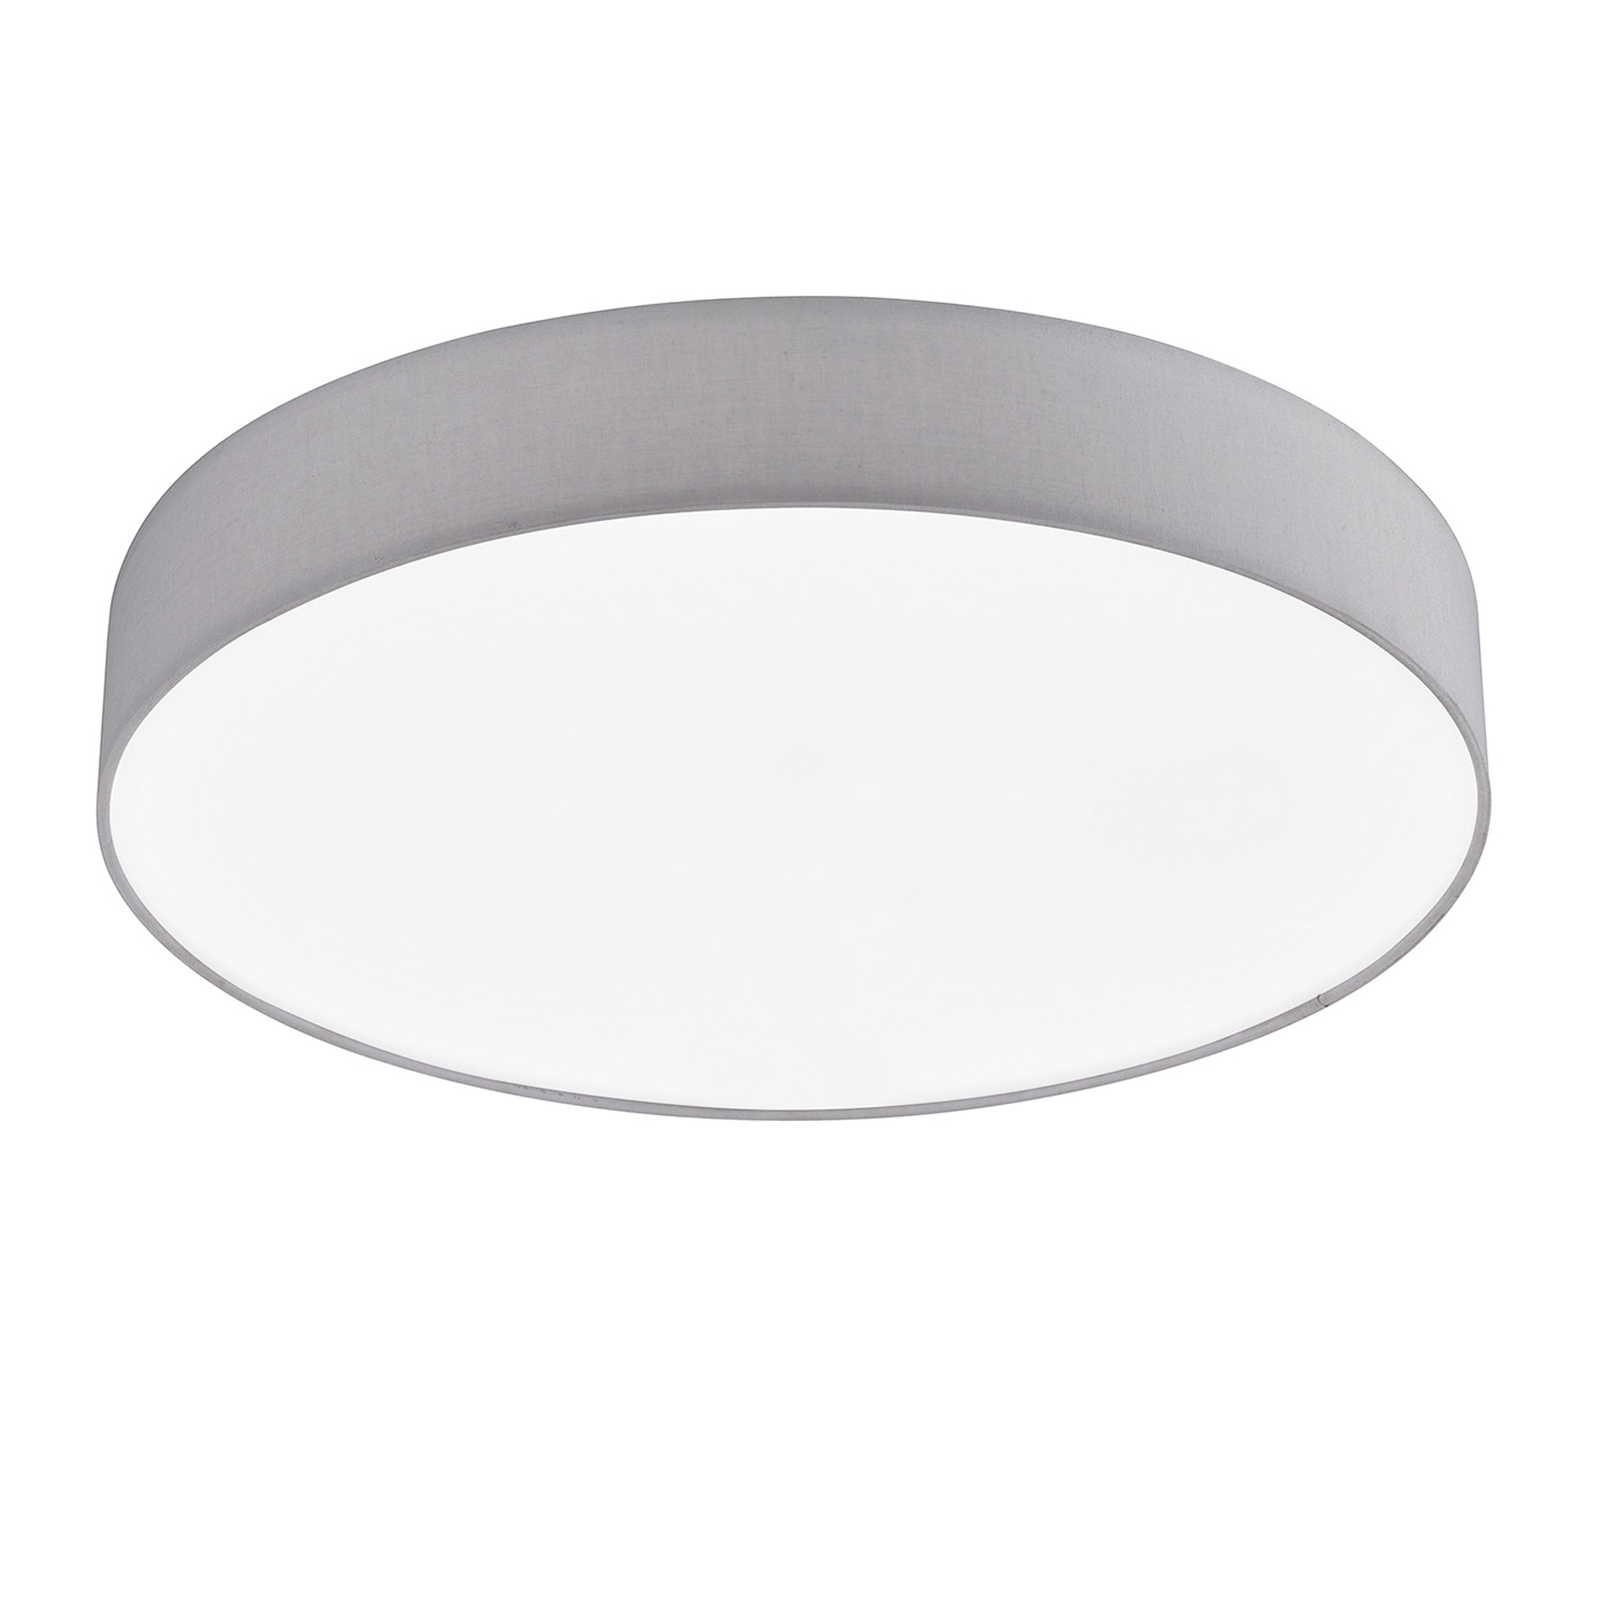 Schöner Wohnen Pina LED ceiling lamp CCT grey